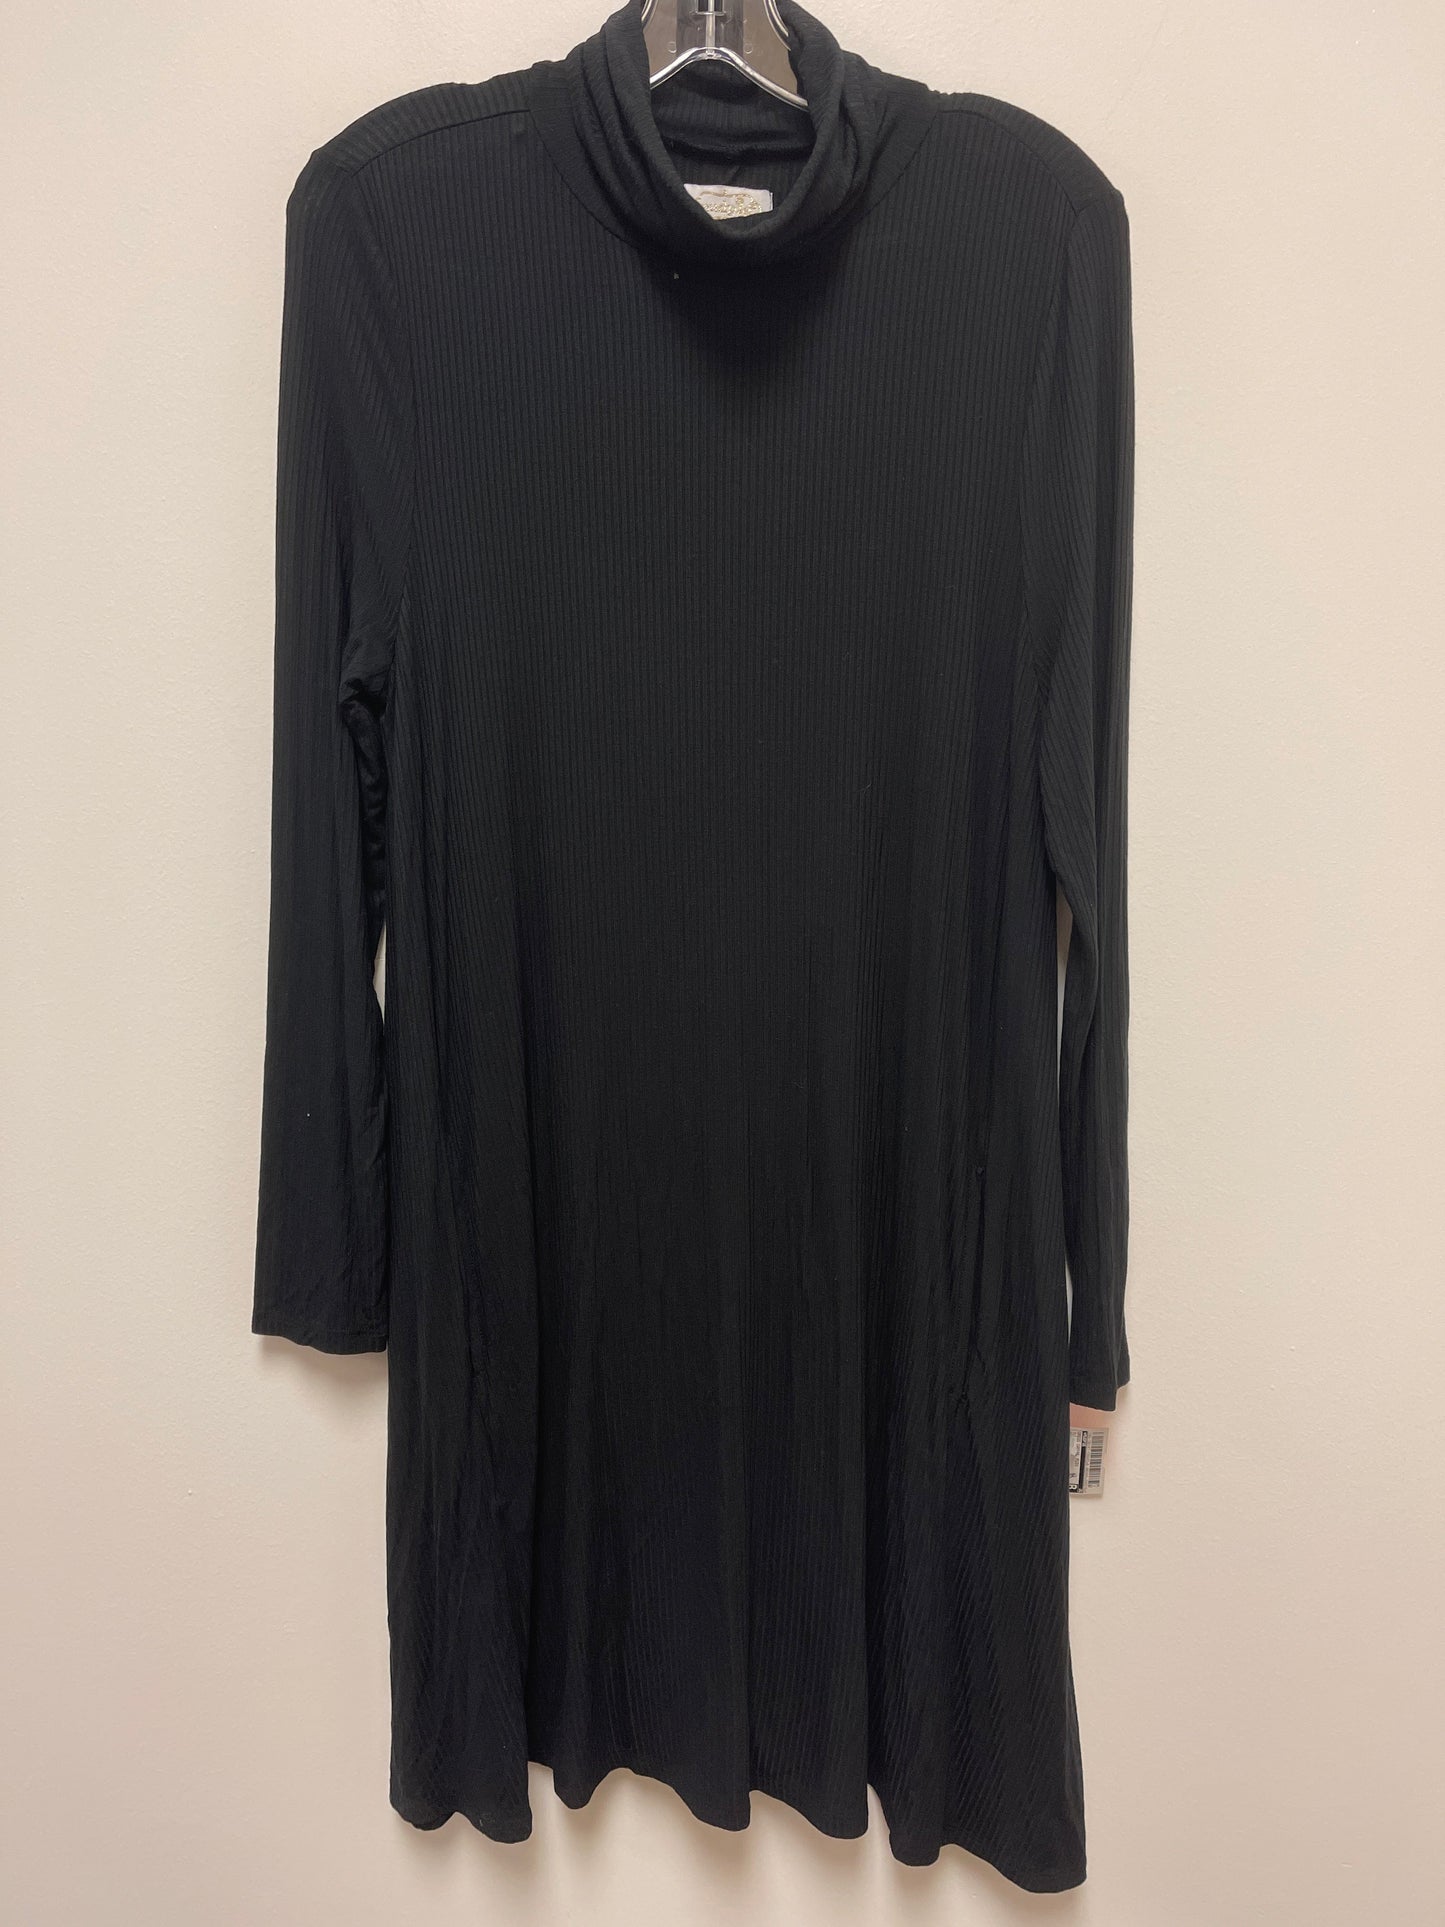 Dress Casual Midi By Mudpie  Size: L